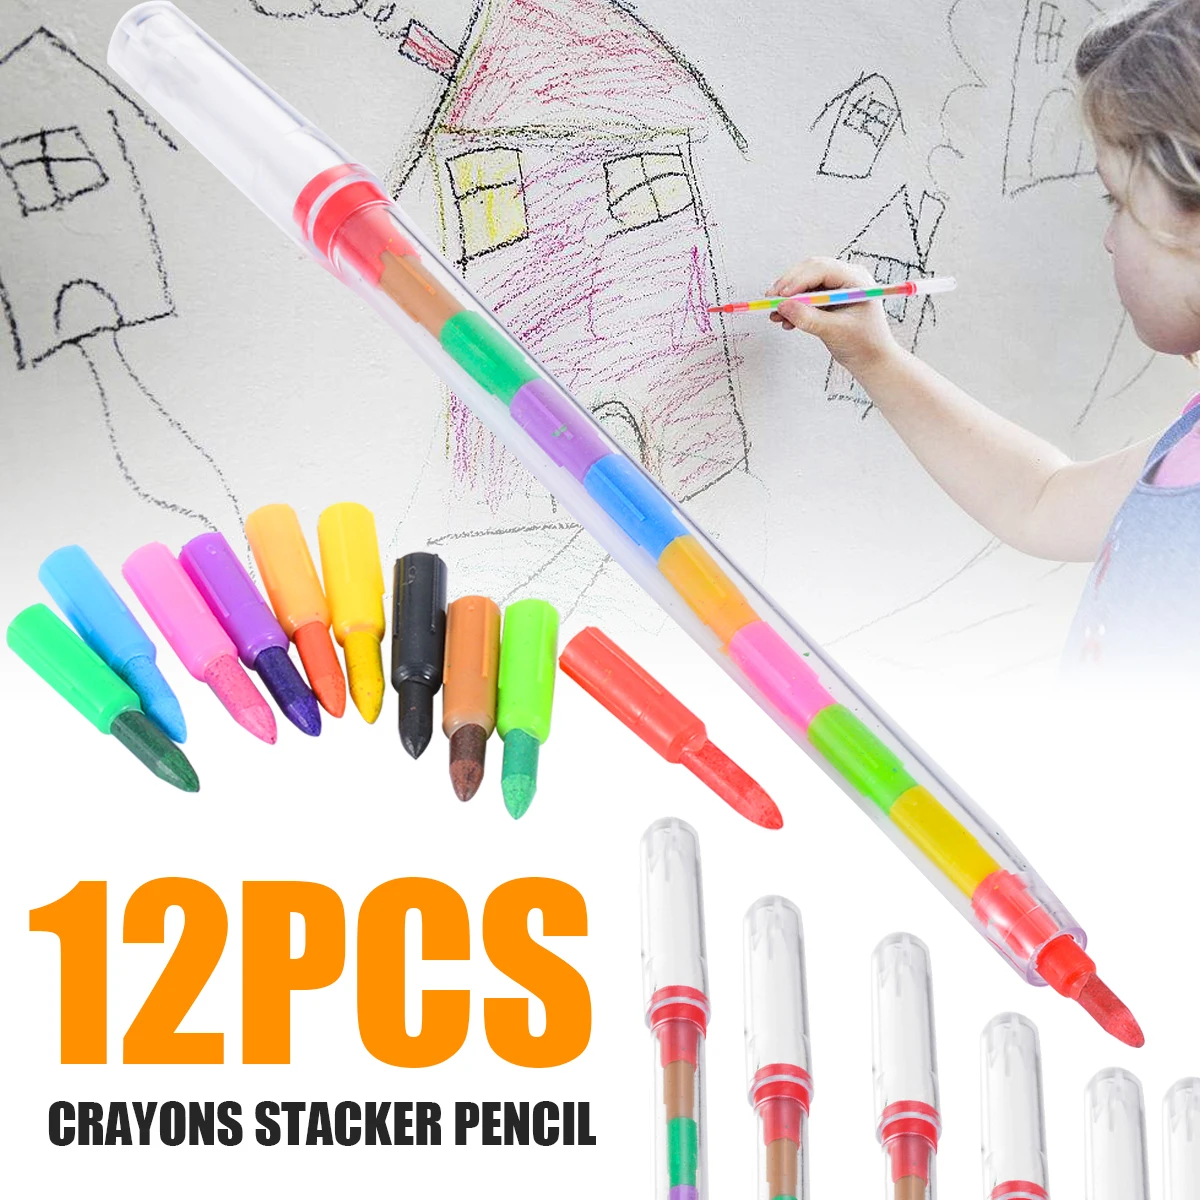 12pcs Cratons Stacker Pencils Drawing Pen Children Painting Pencil Wax Crayon Art Painting Pen Kids Graffiti Crayons